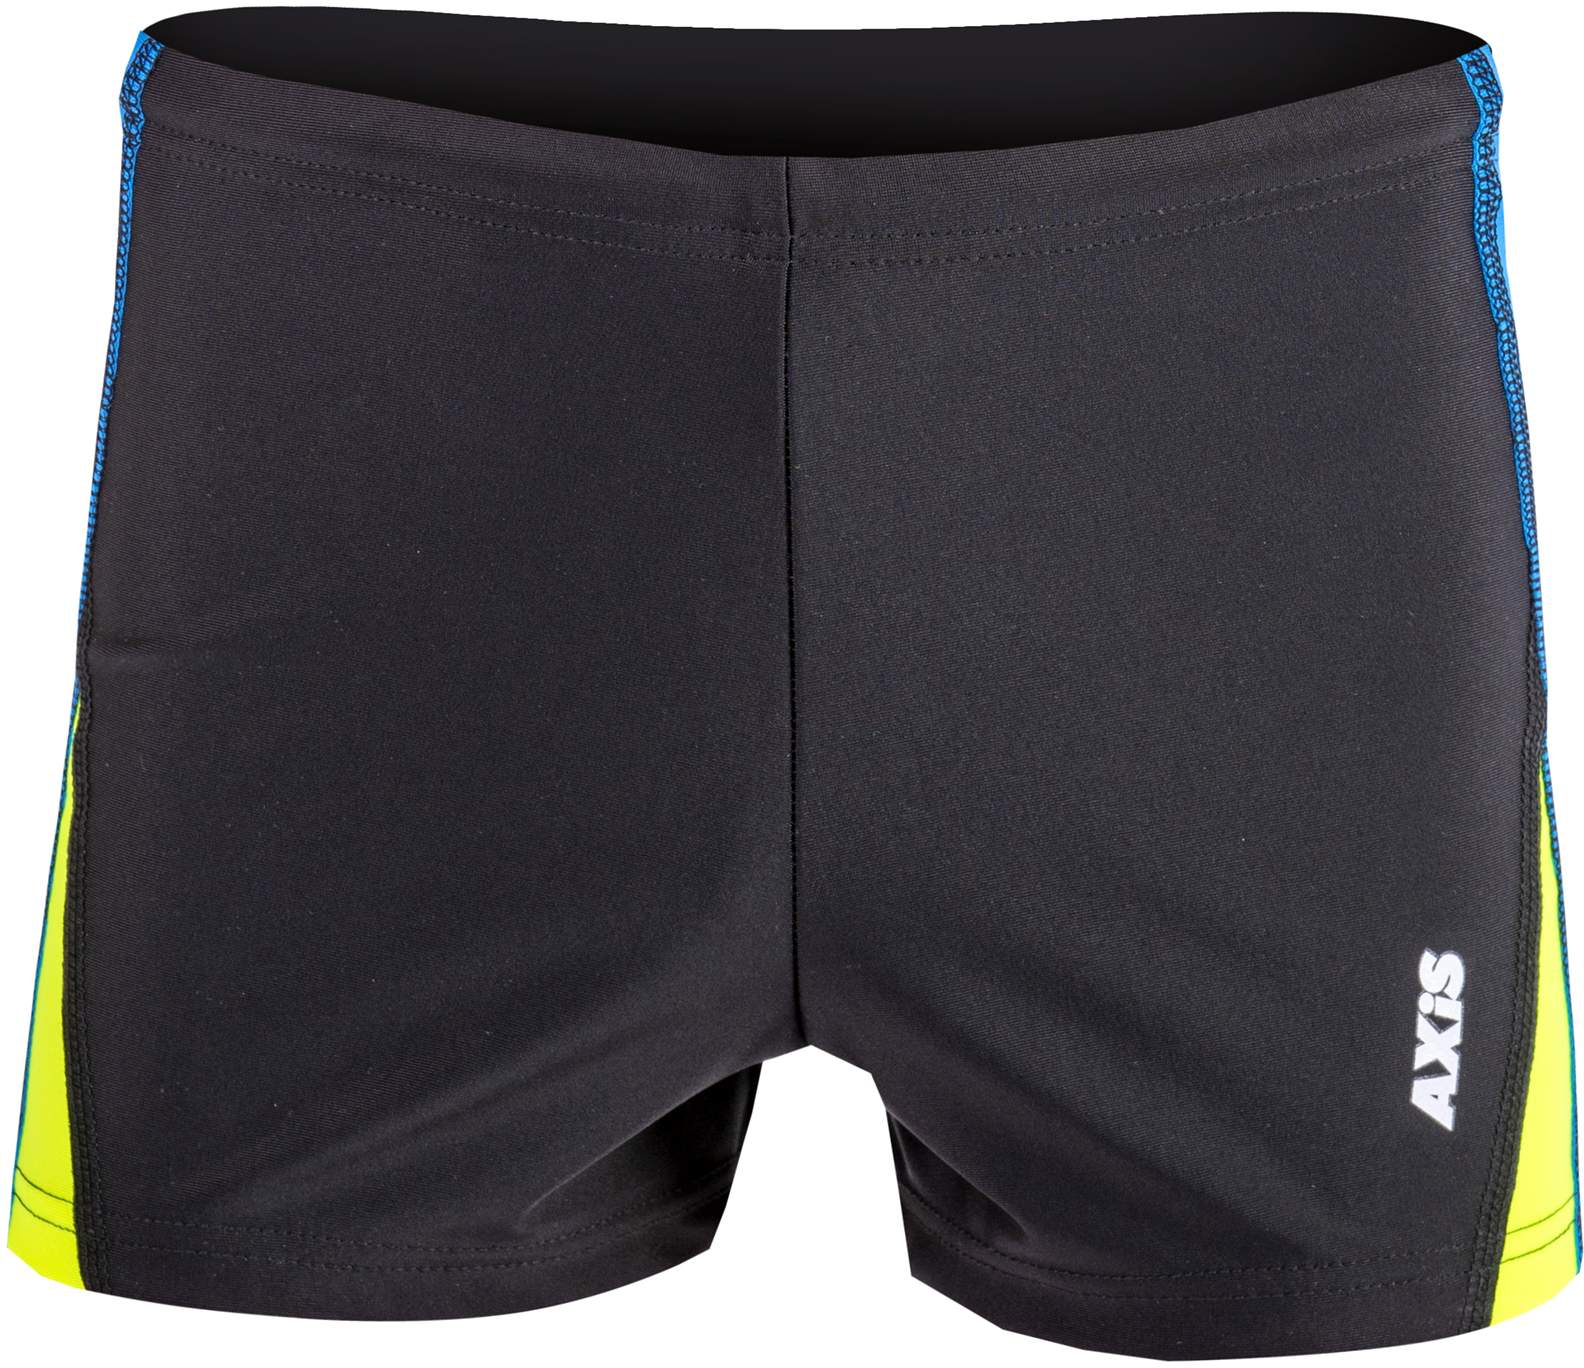 Boys’ swim shorts